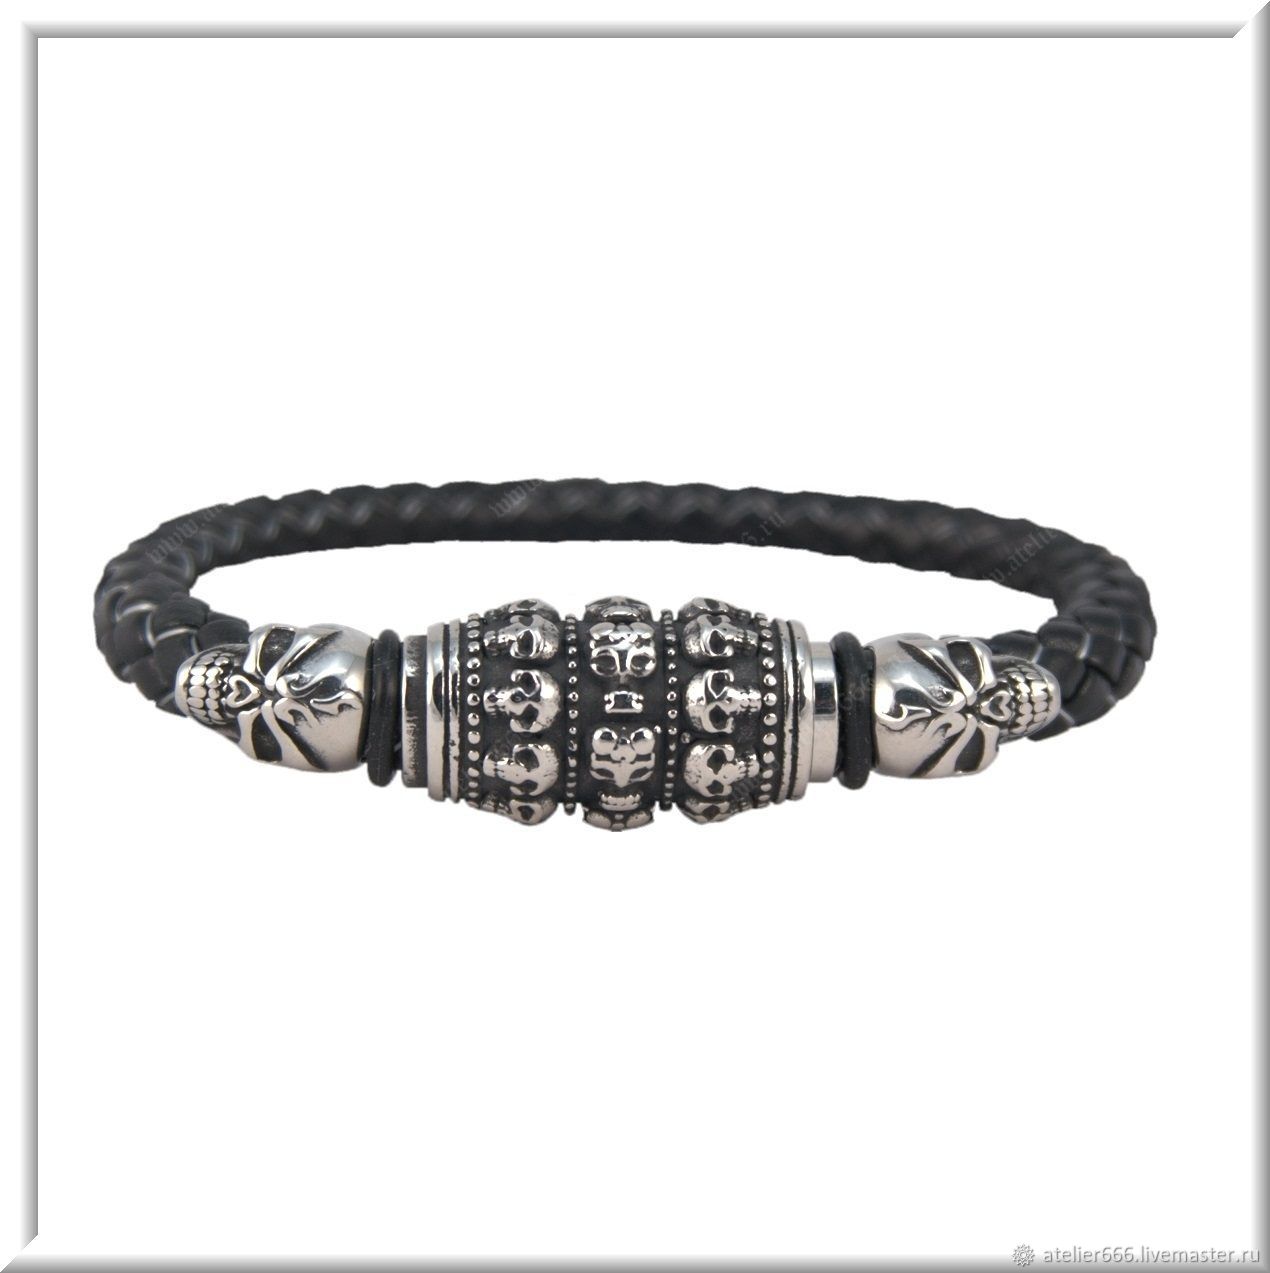 Men's leather bracelet No. 26 accessories steel 316L, Regaliz bracelet, Moscow,  Фото №1